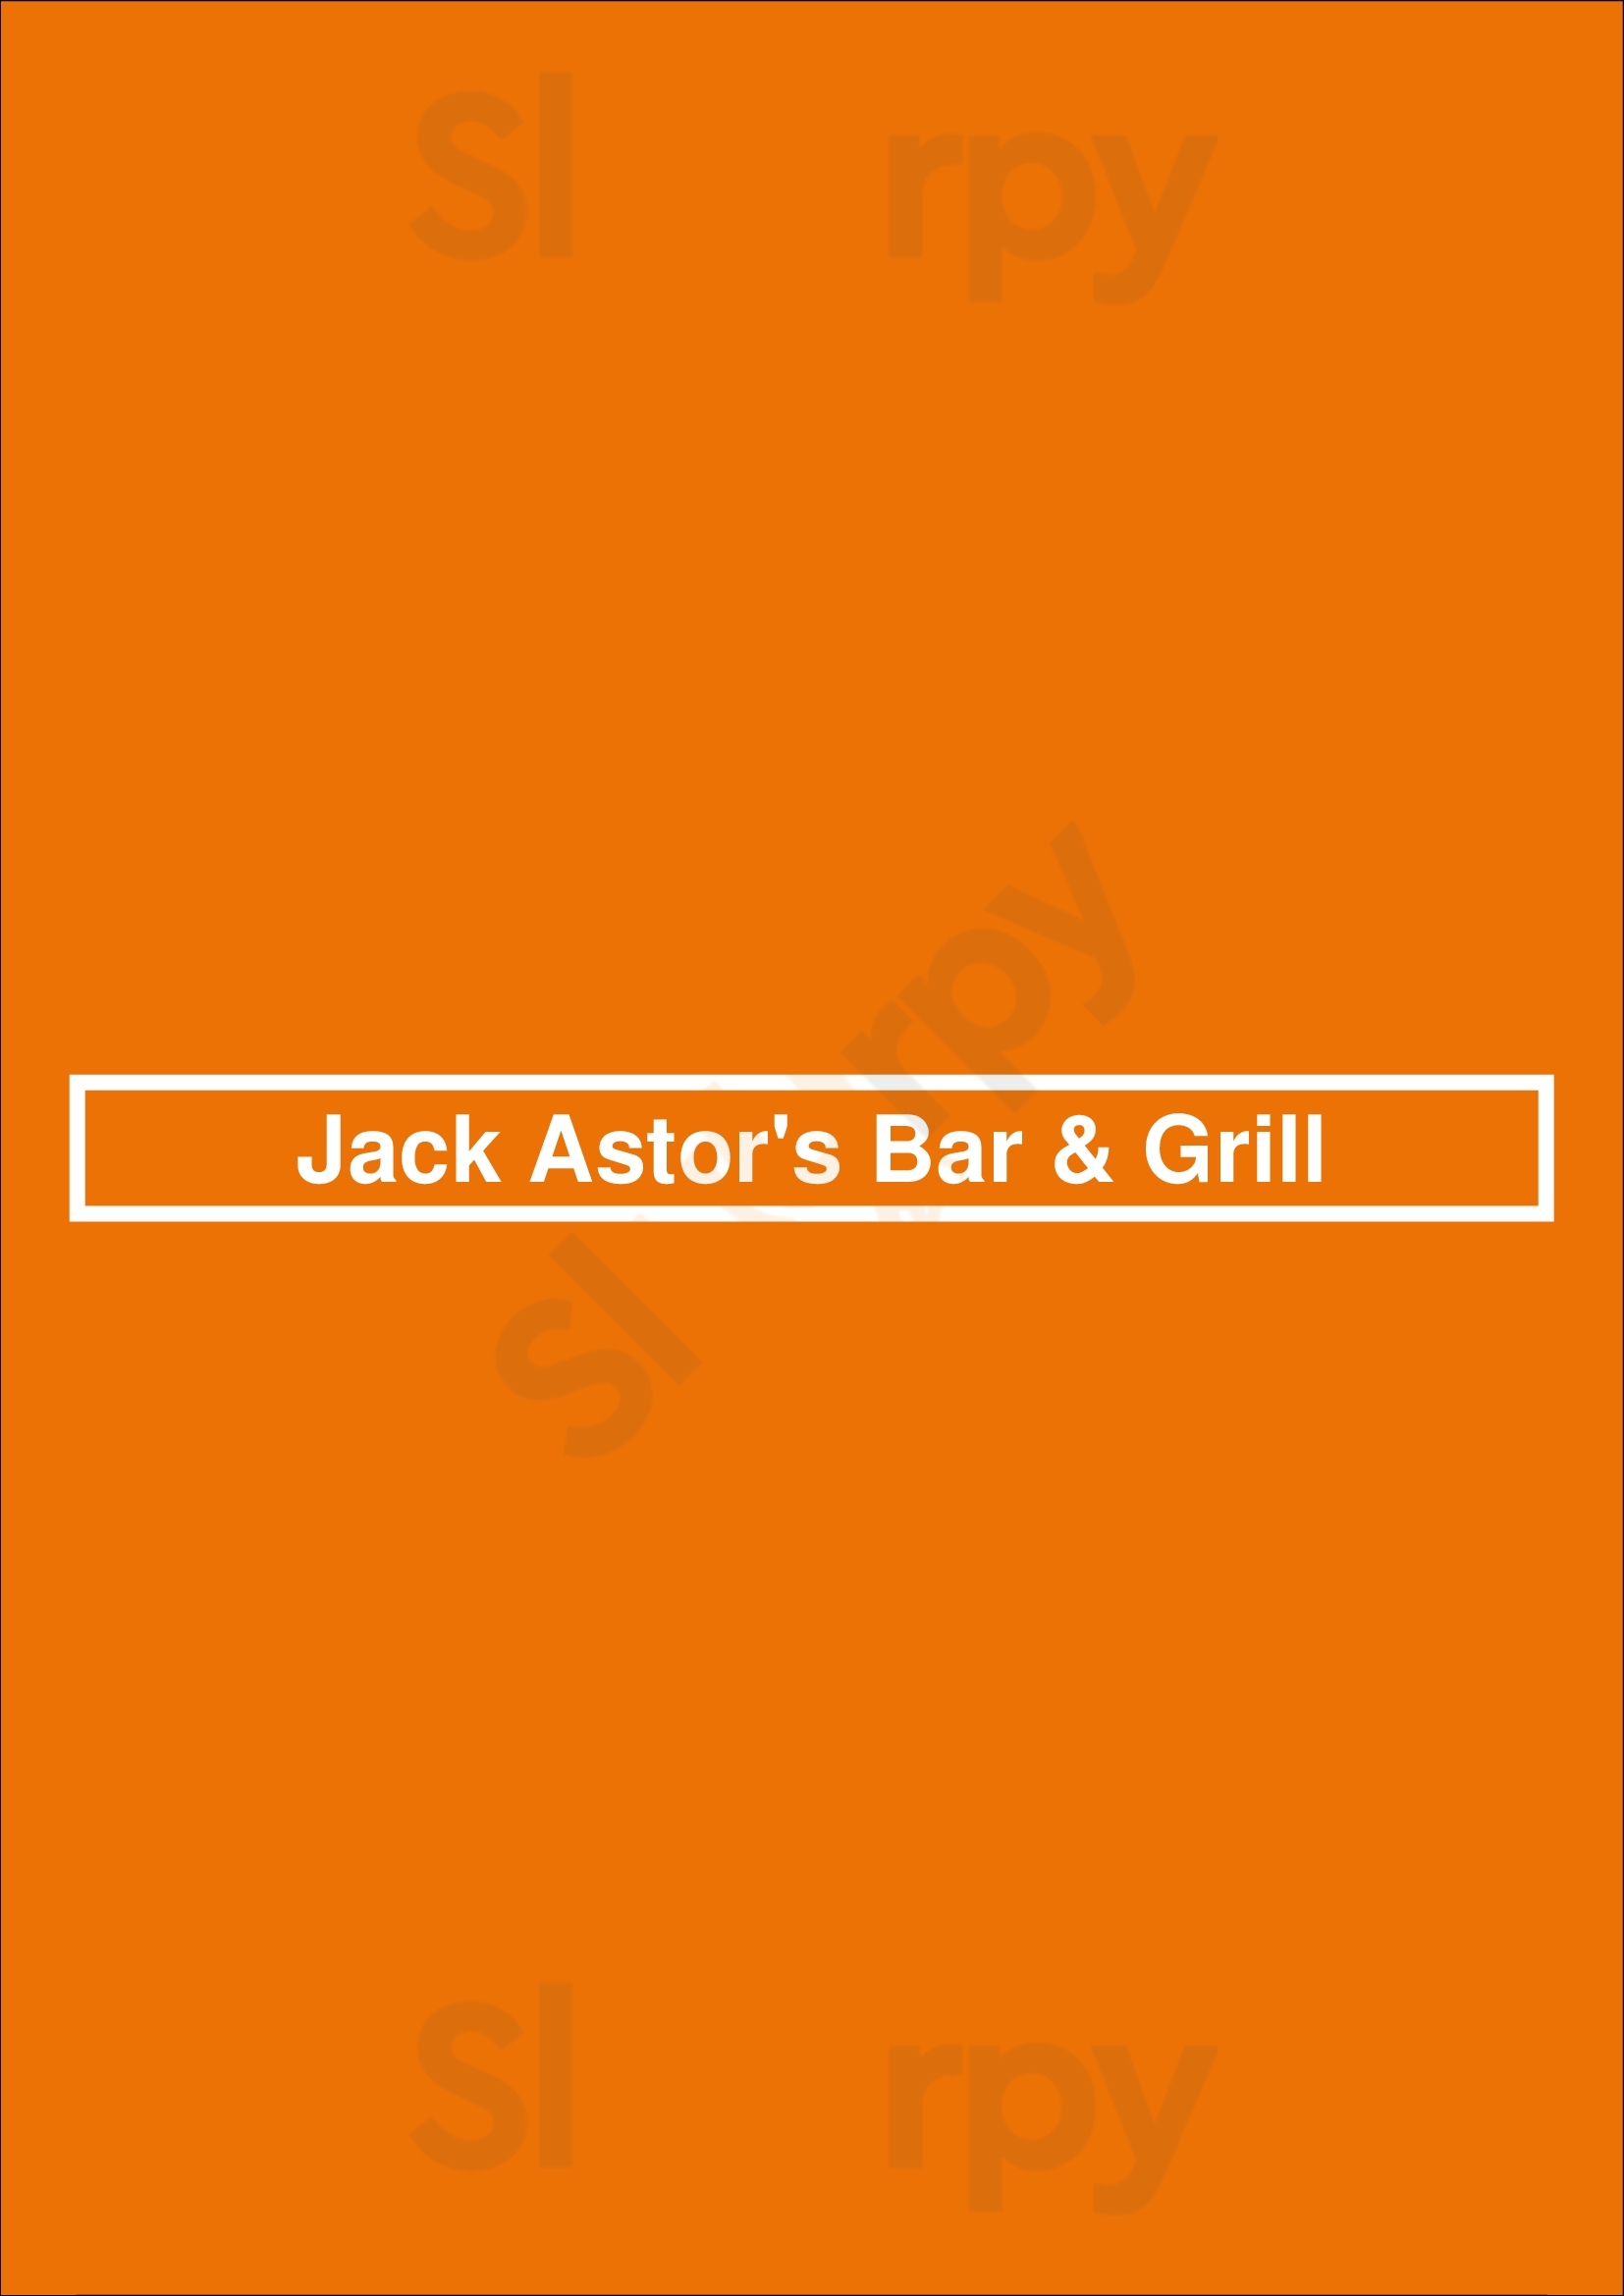 Jack Astor's Laval Menu - 1